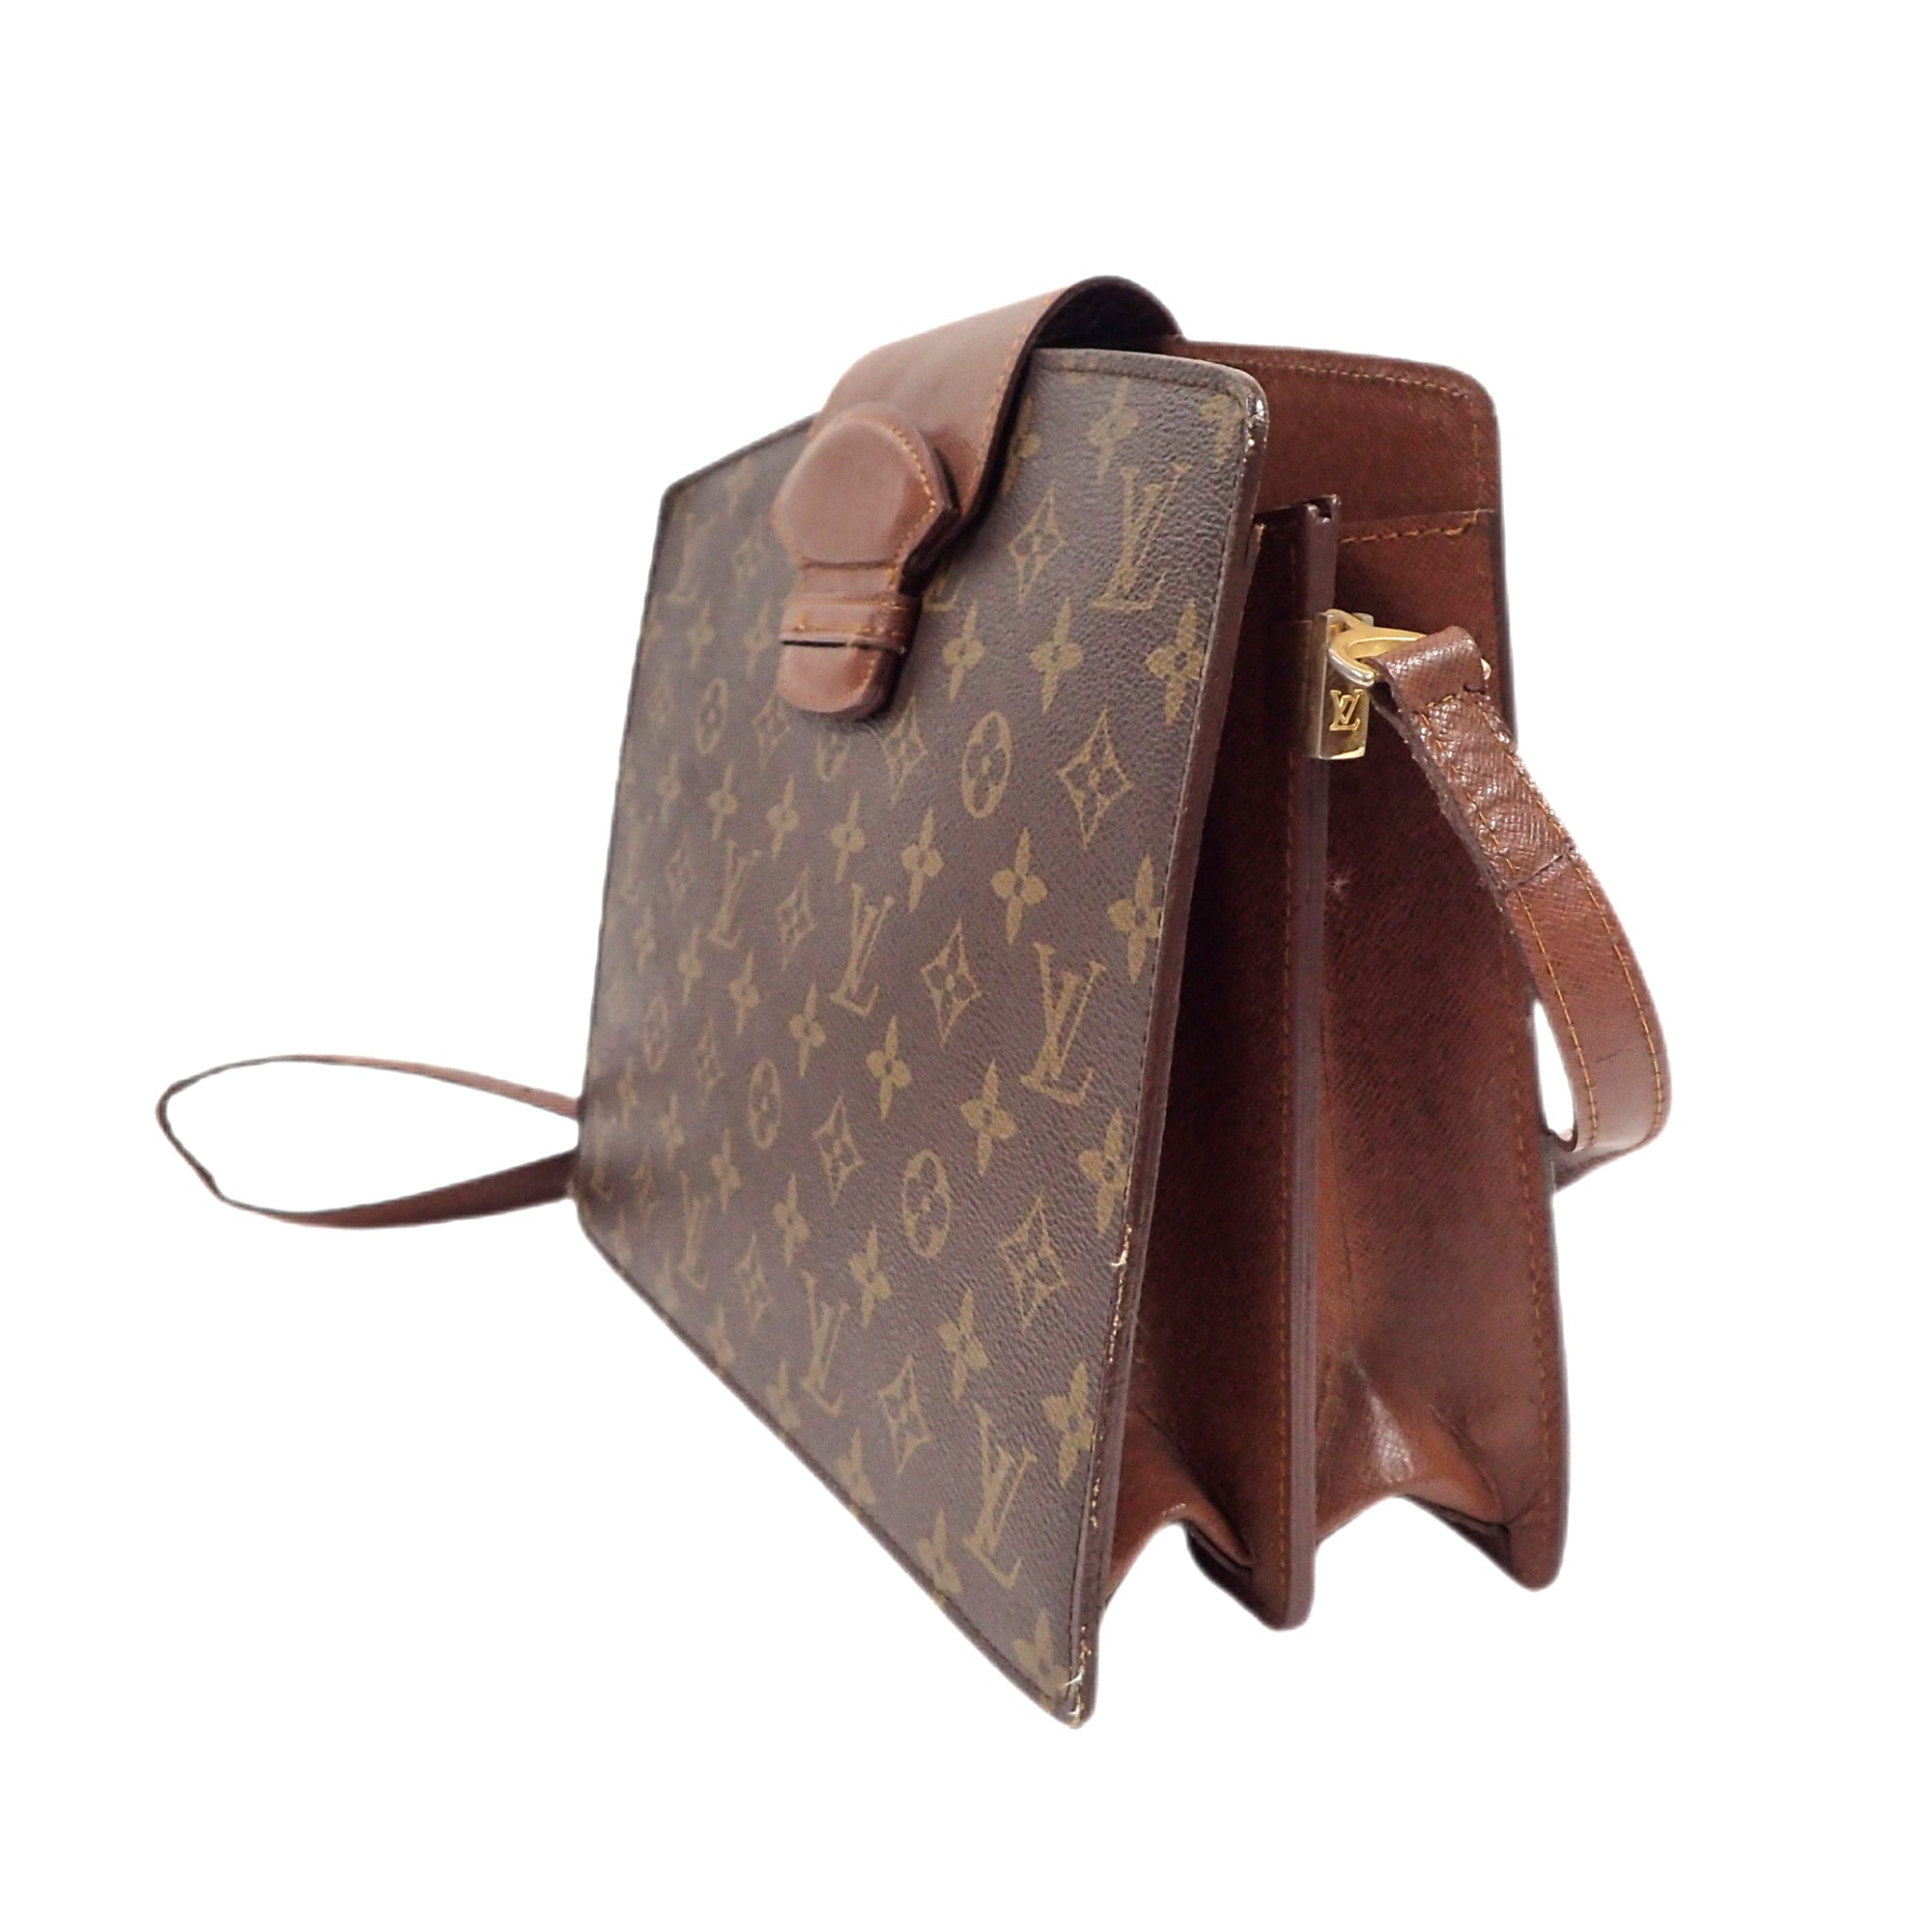 Vintage Sac MY - Louis Vuitton Courcelles Bag! ❤️ Great